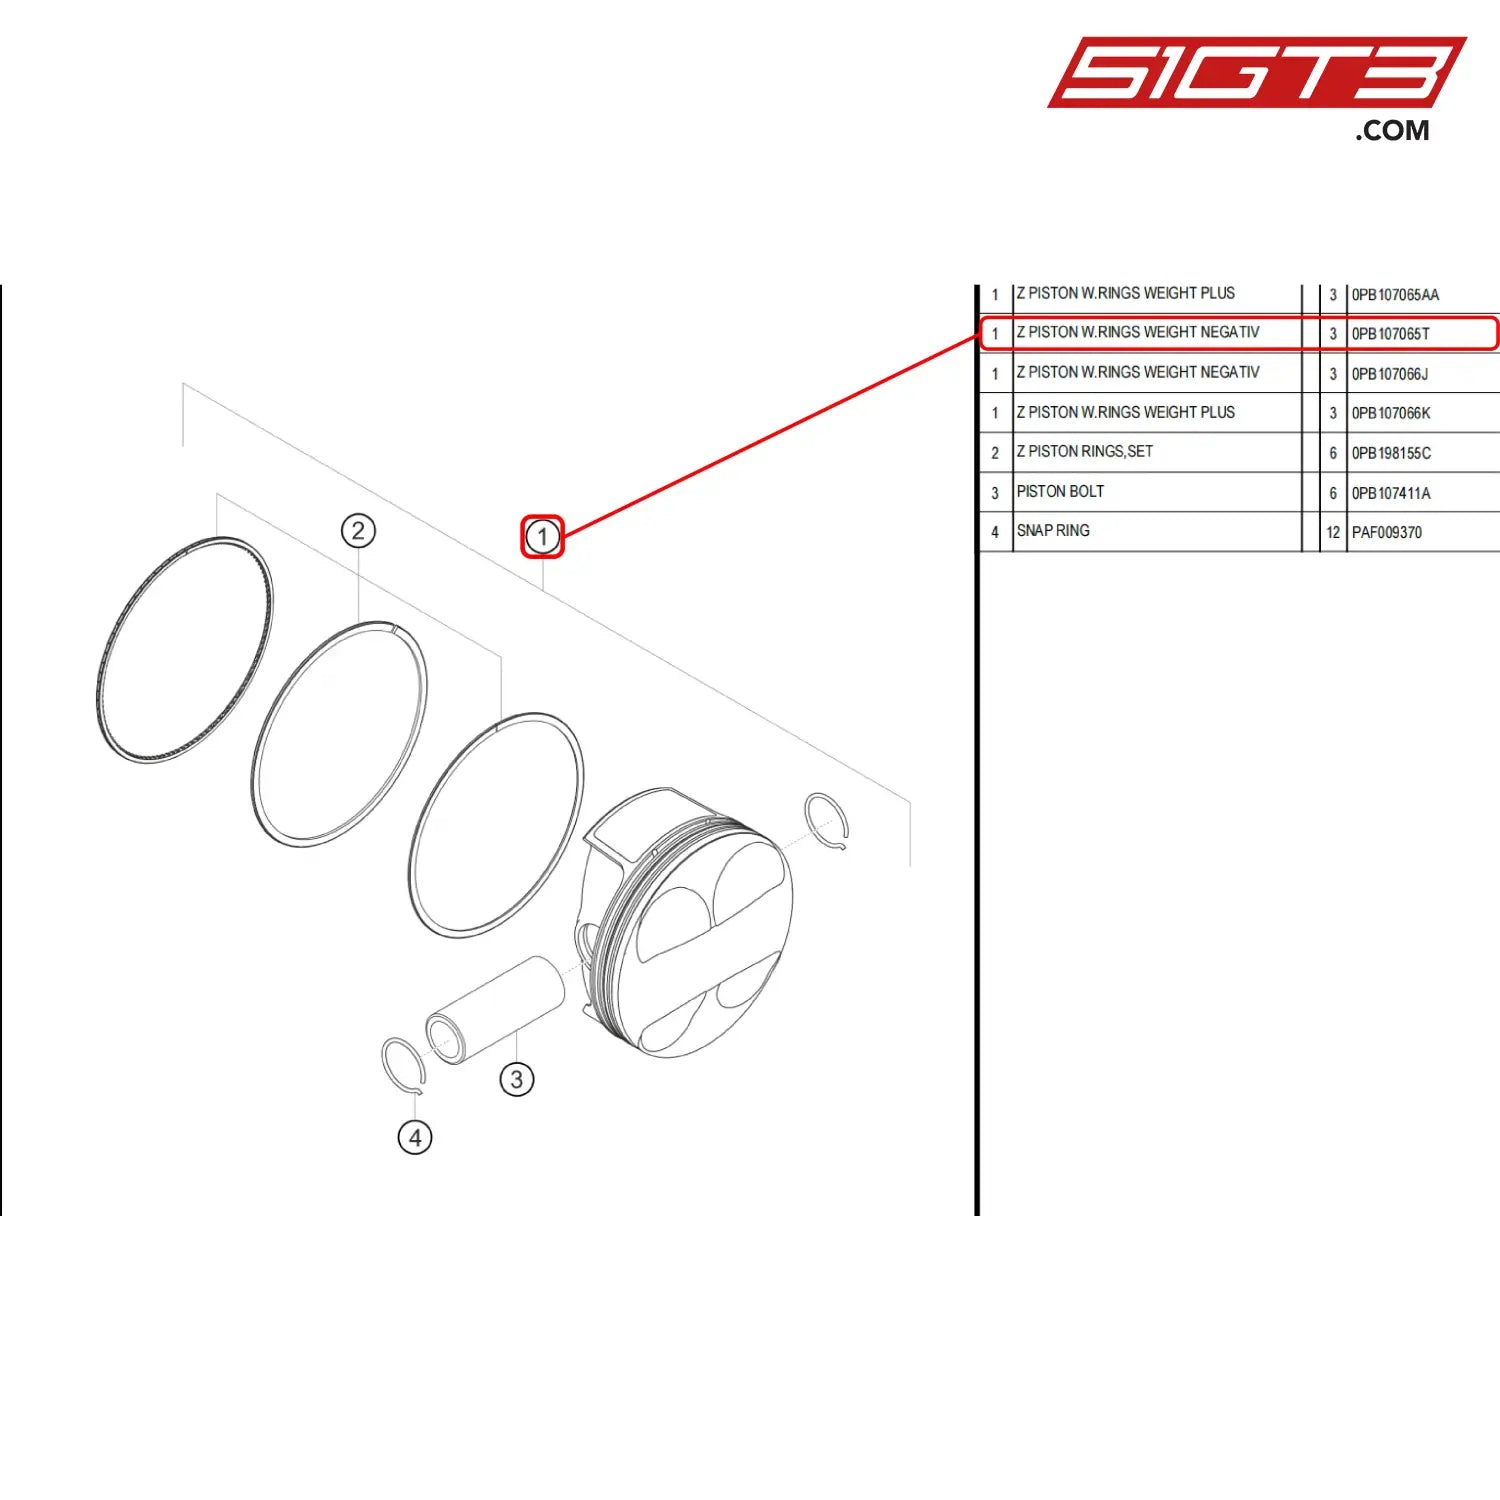 Z Piston W.rings Weight Negativ - 0Pb107065T [Porsche 718 Cayman Gt4 Rs Clubsport] Piston